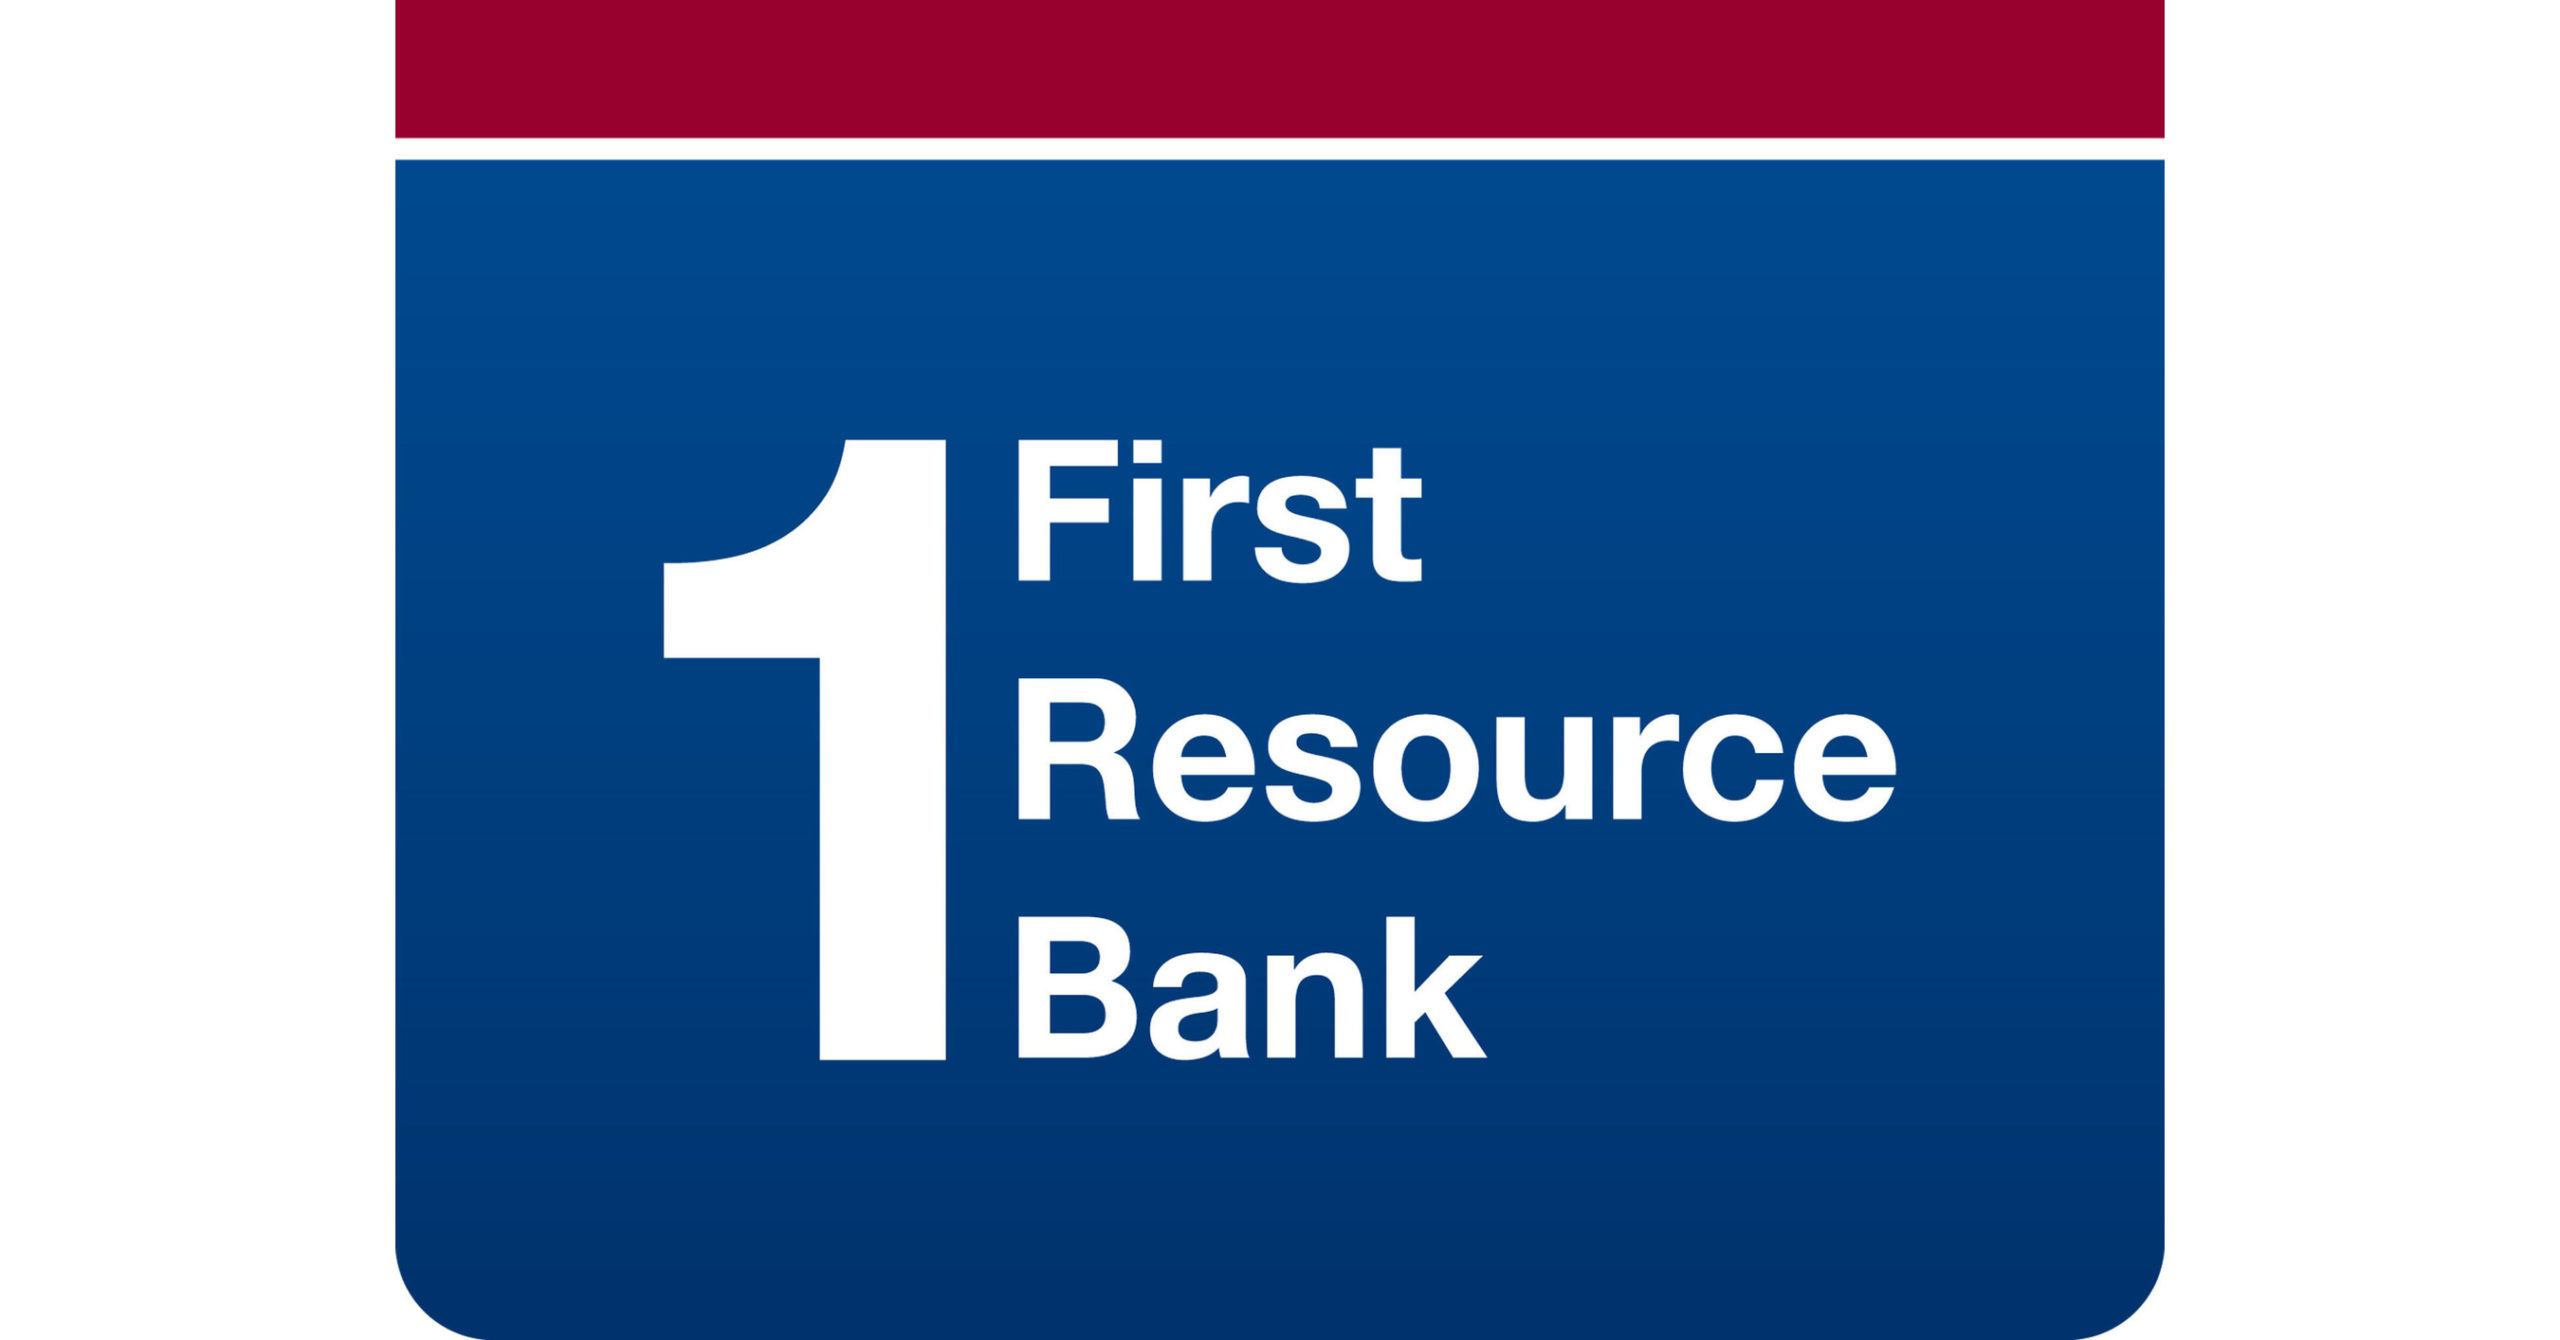 Resource bank. First name Bank.